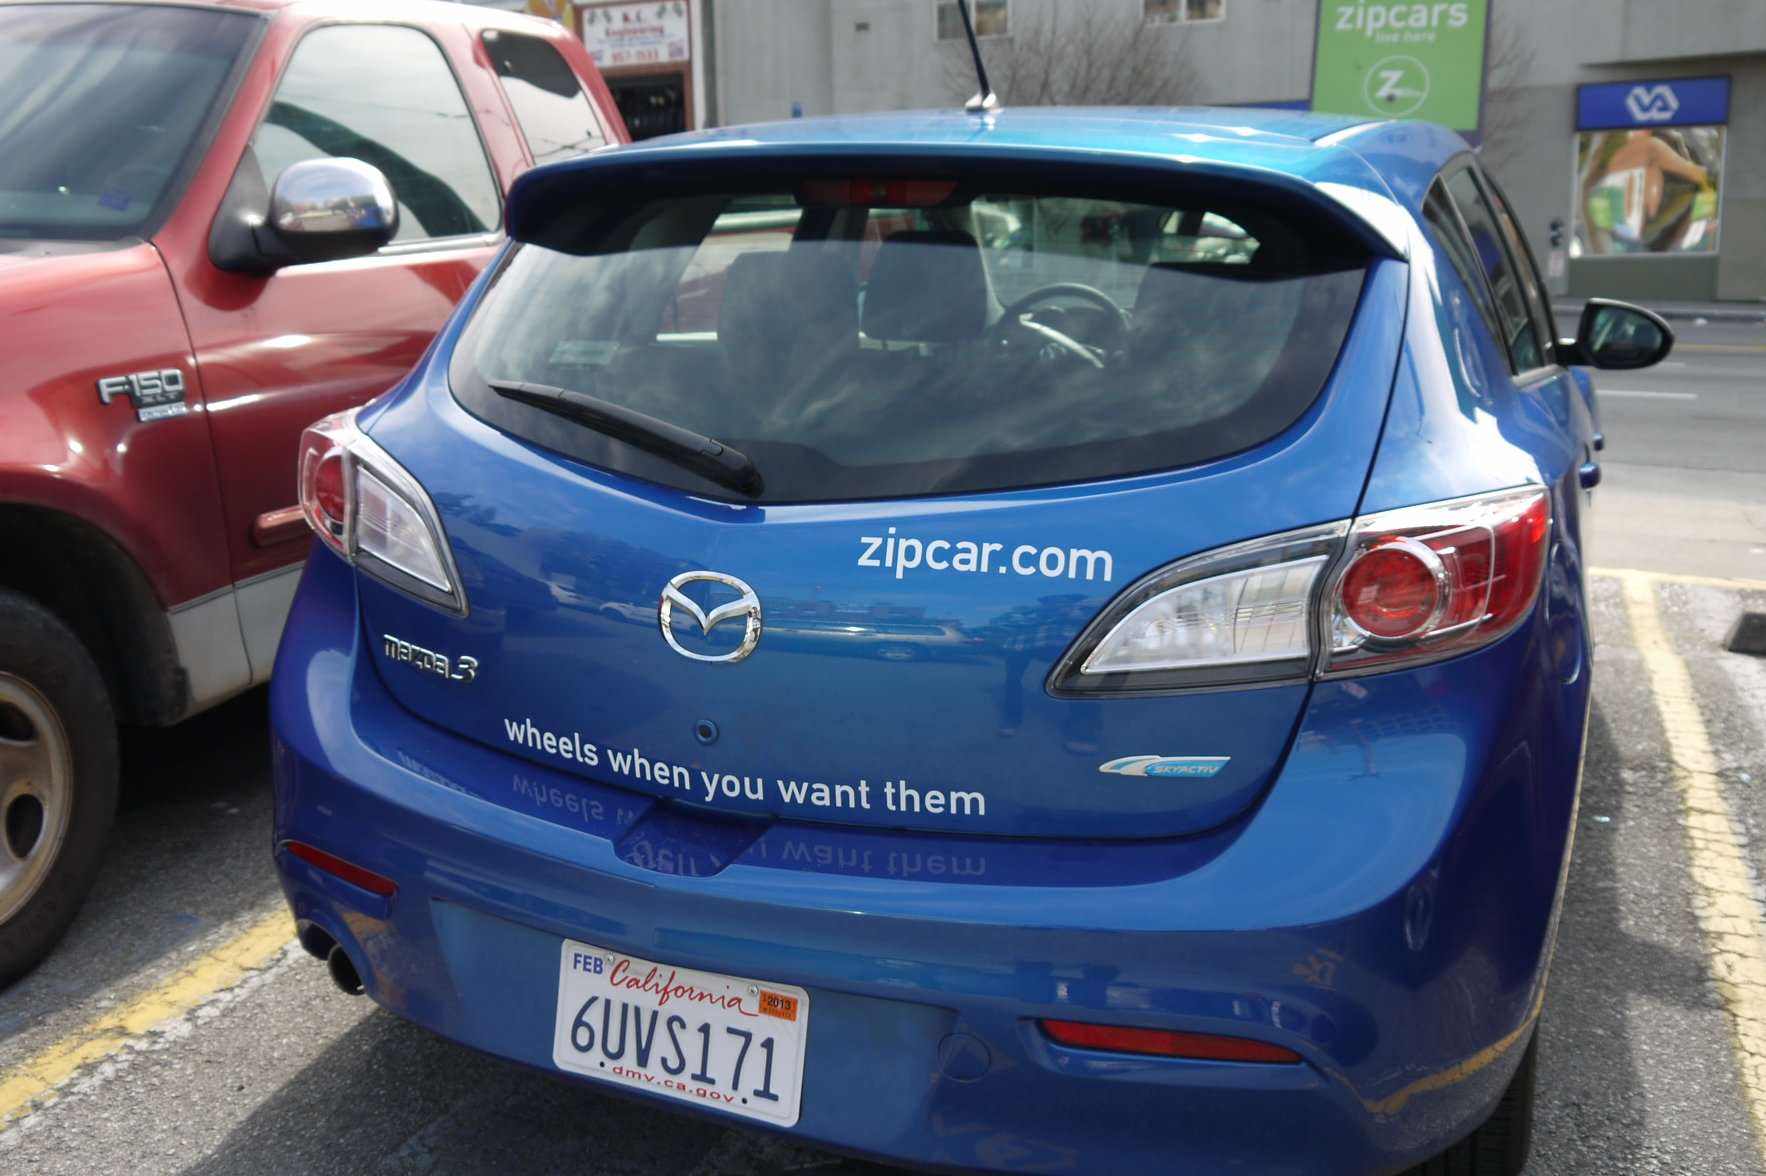 Zipcar San Francisco